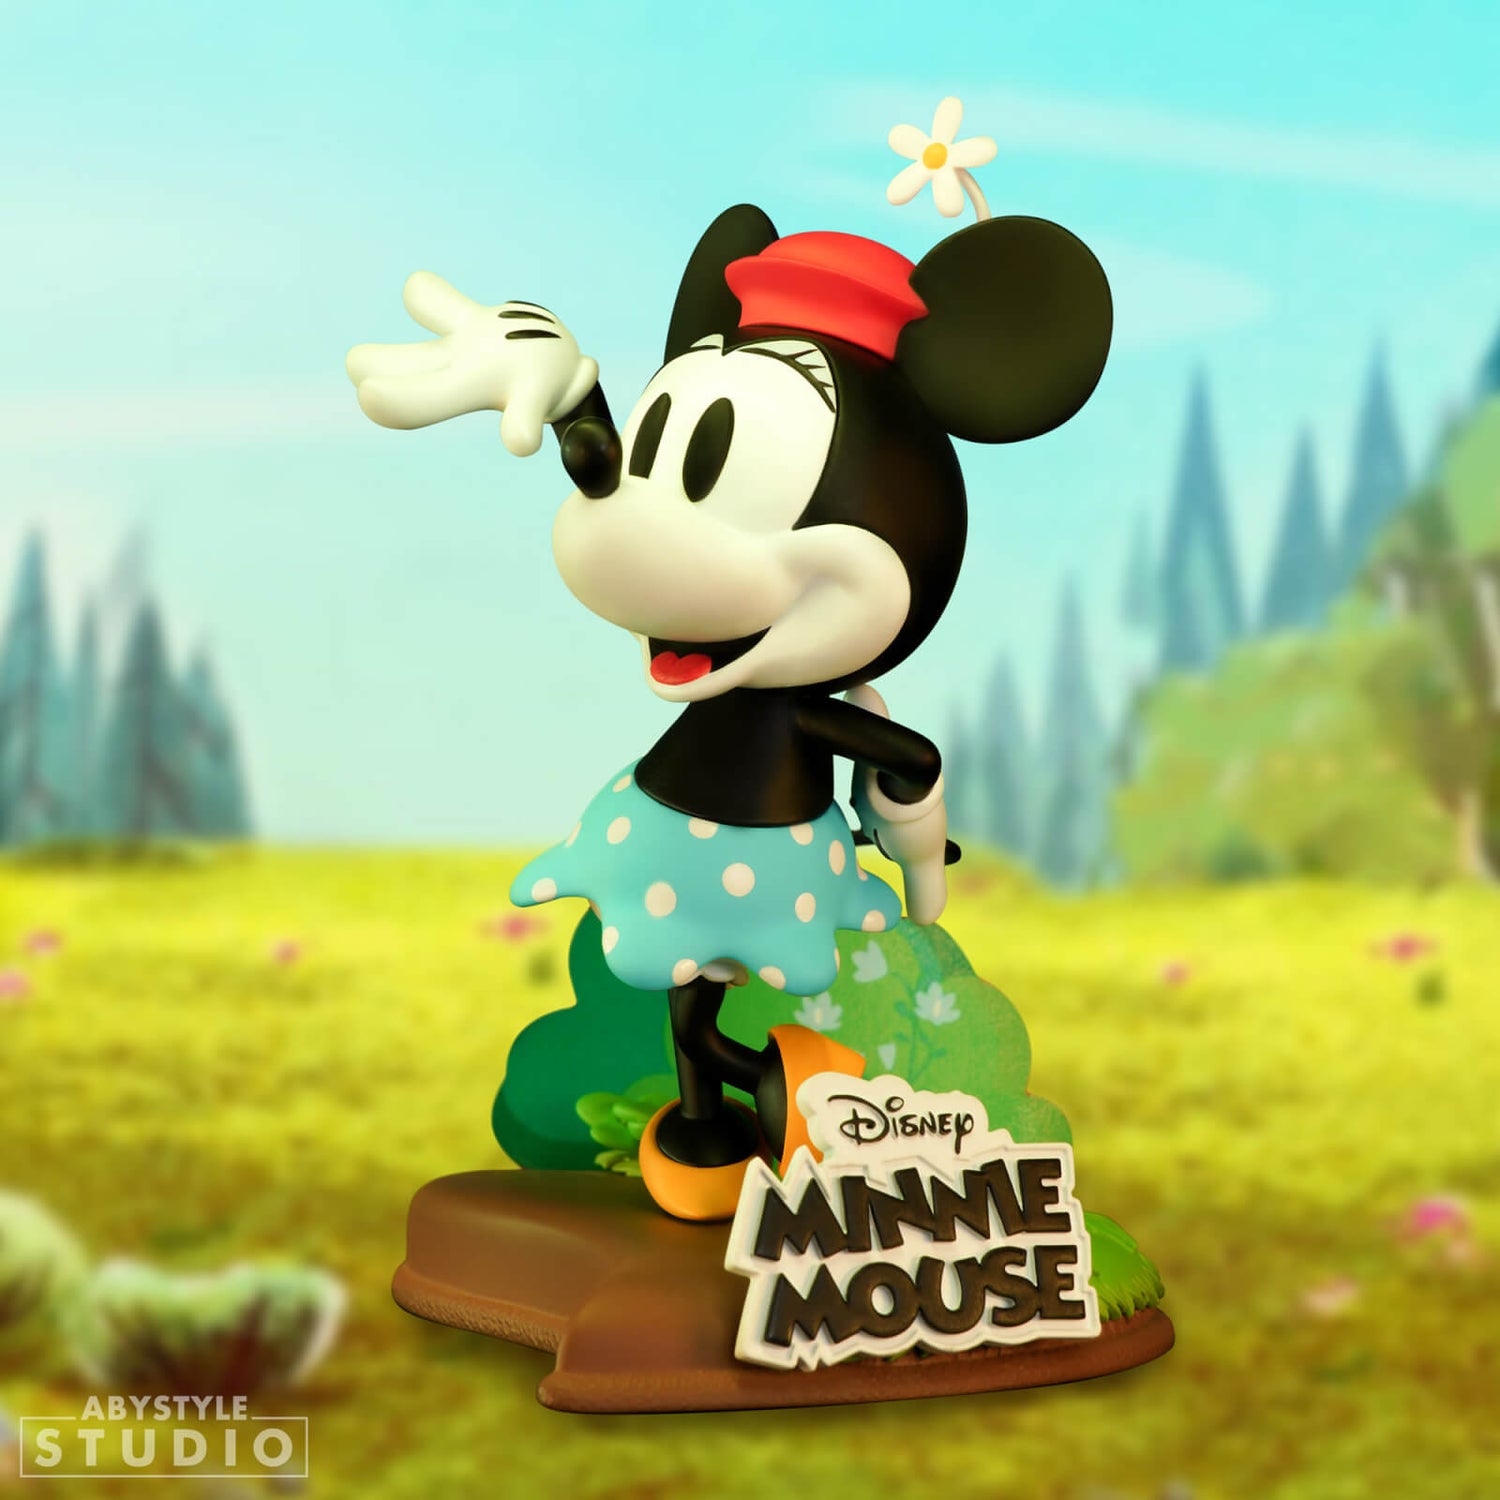 Disney Minnie Mouse AbyStyle Studio Figure - 10cm